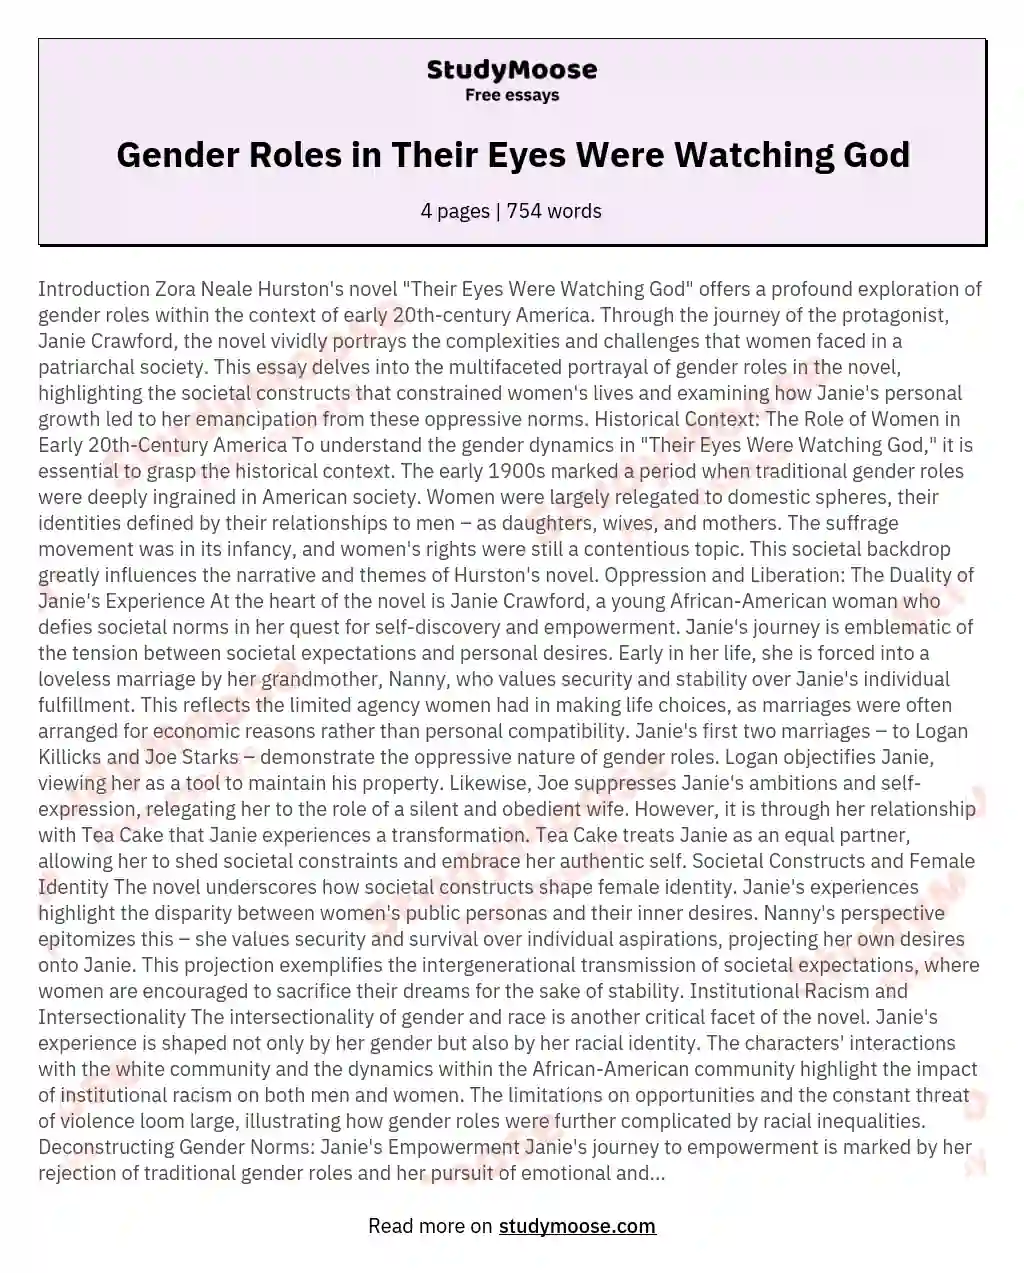 Gender Roles in Their Eyes Were Watching God essay